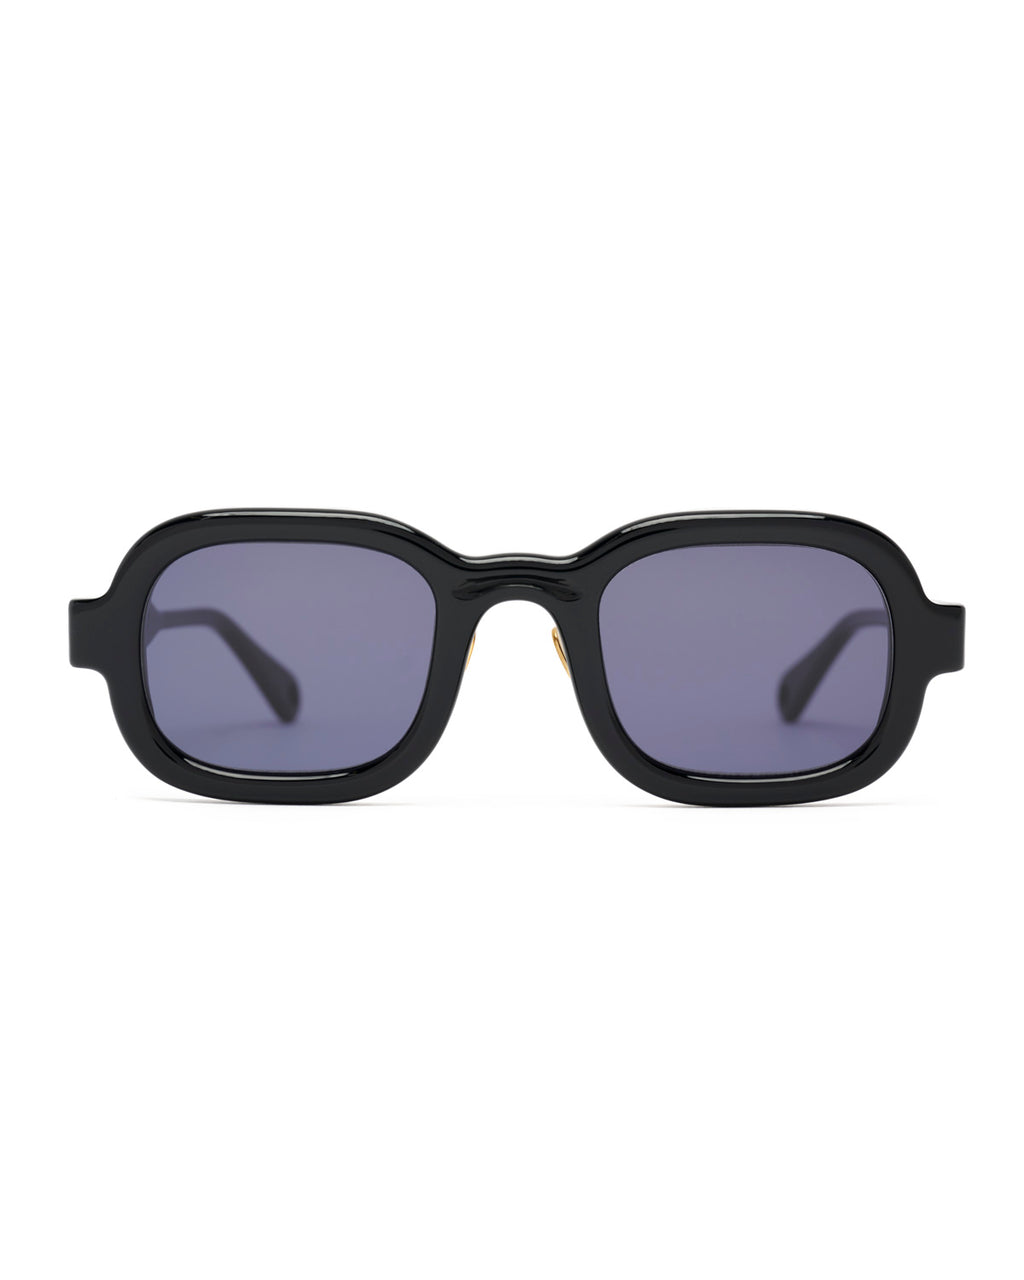 Newman Post Modern Primitive Eye Protection - Black/Blue